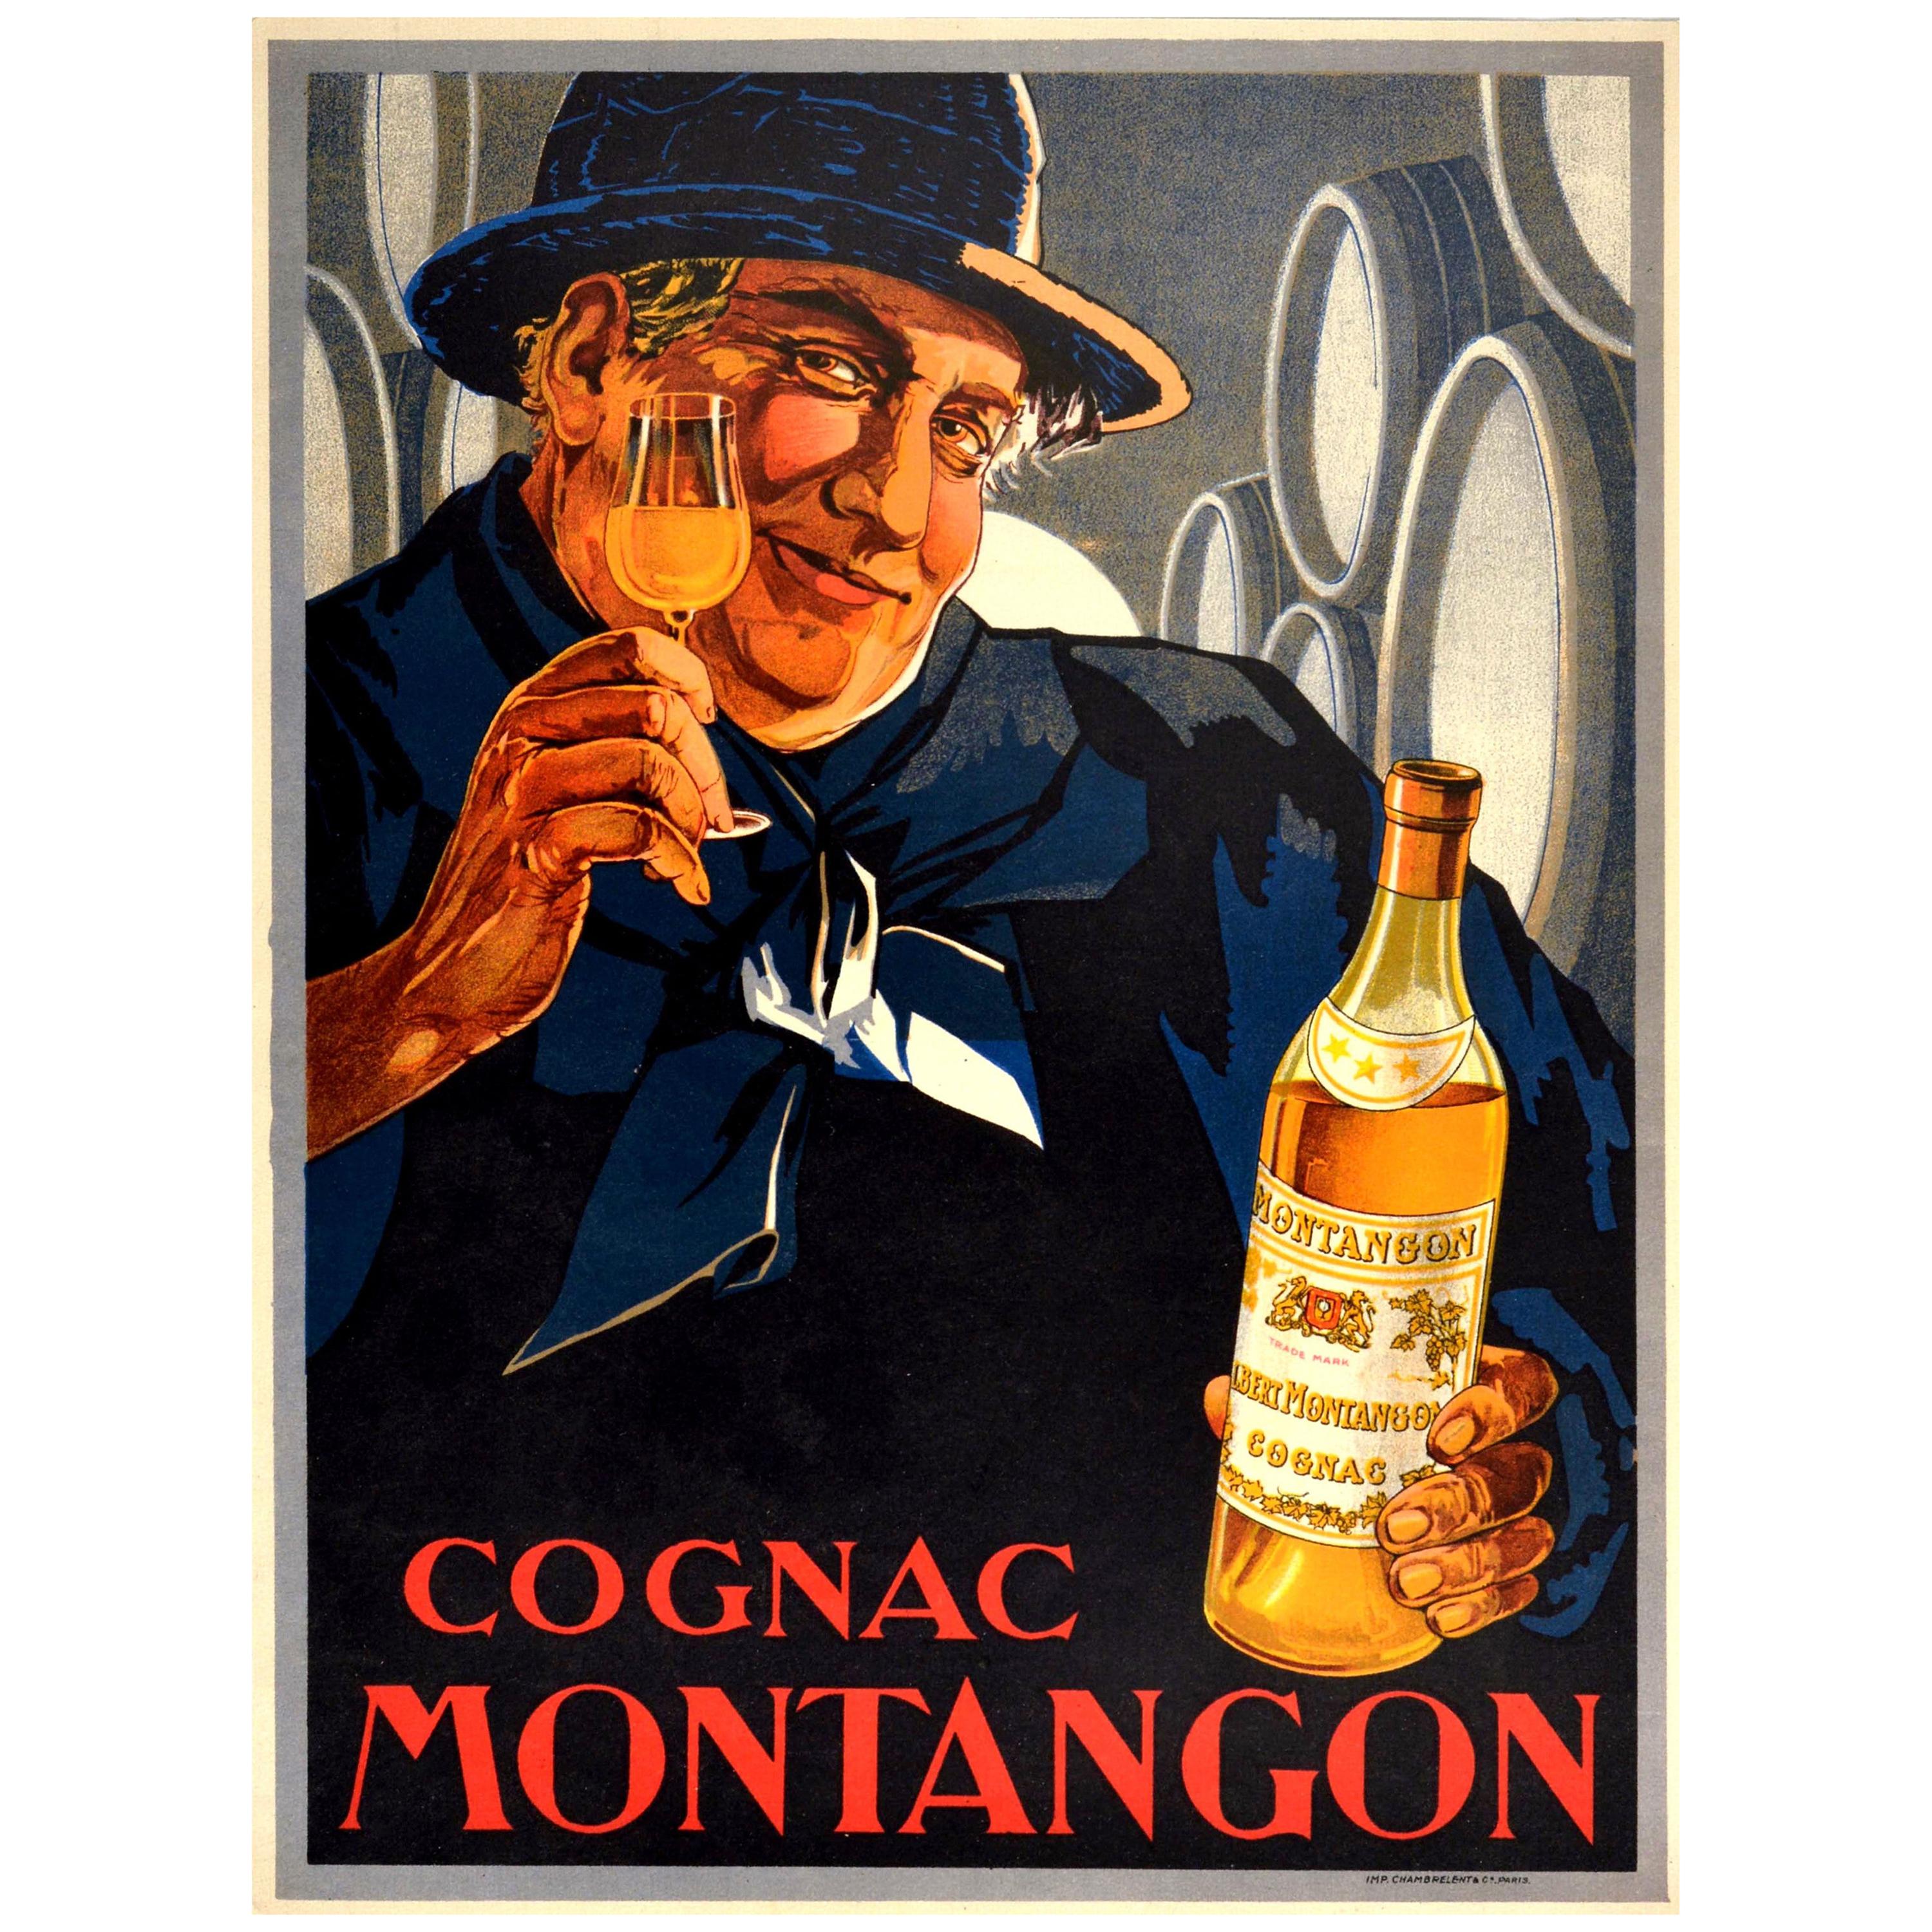 Original Antique Poster Cognac Montangon France Alcohol Drink Advertising Art